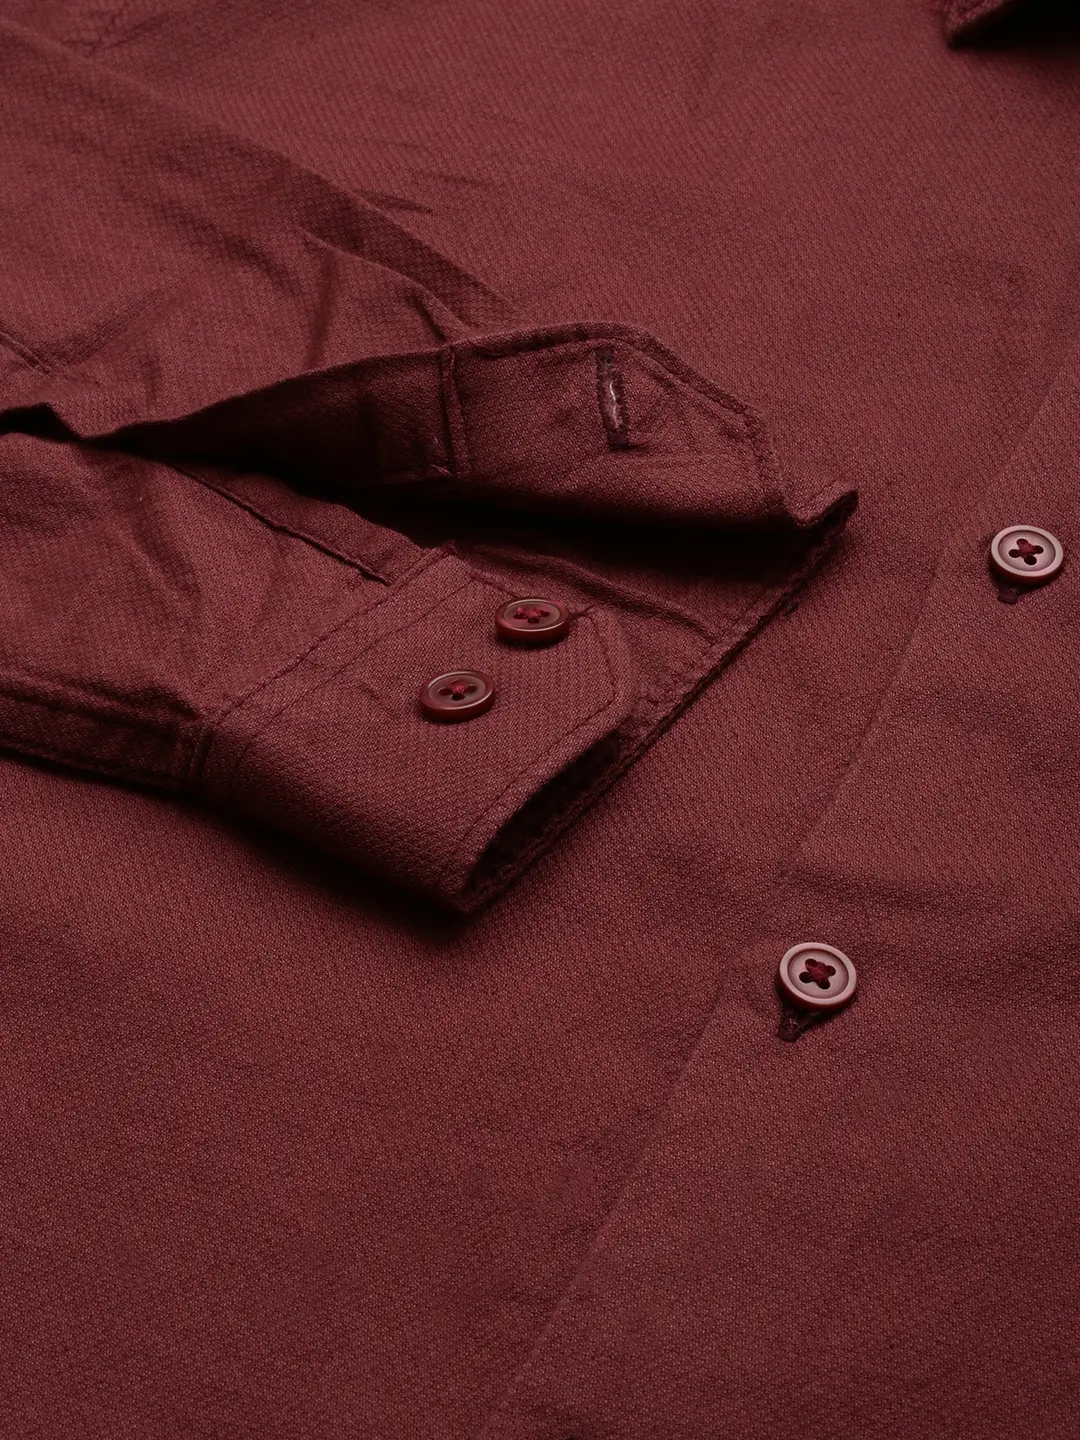 SHOWOFF Men's Rust Spread Collar Solid Shirt